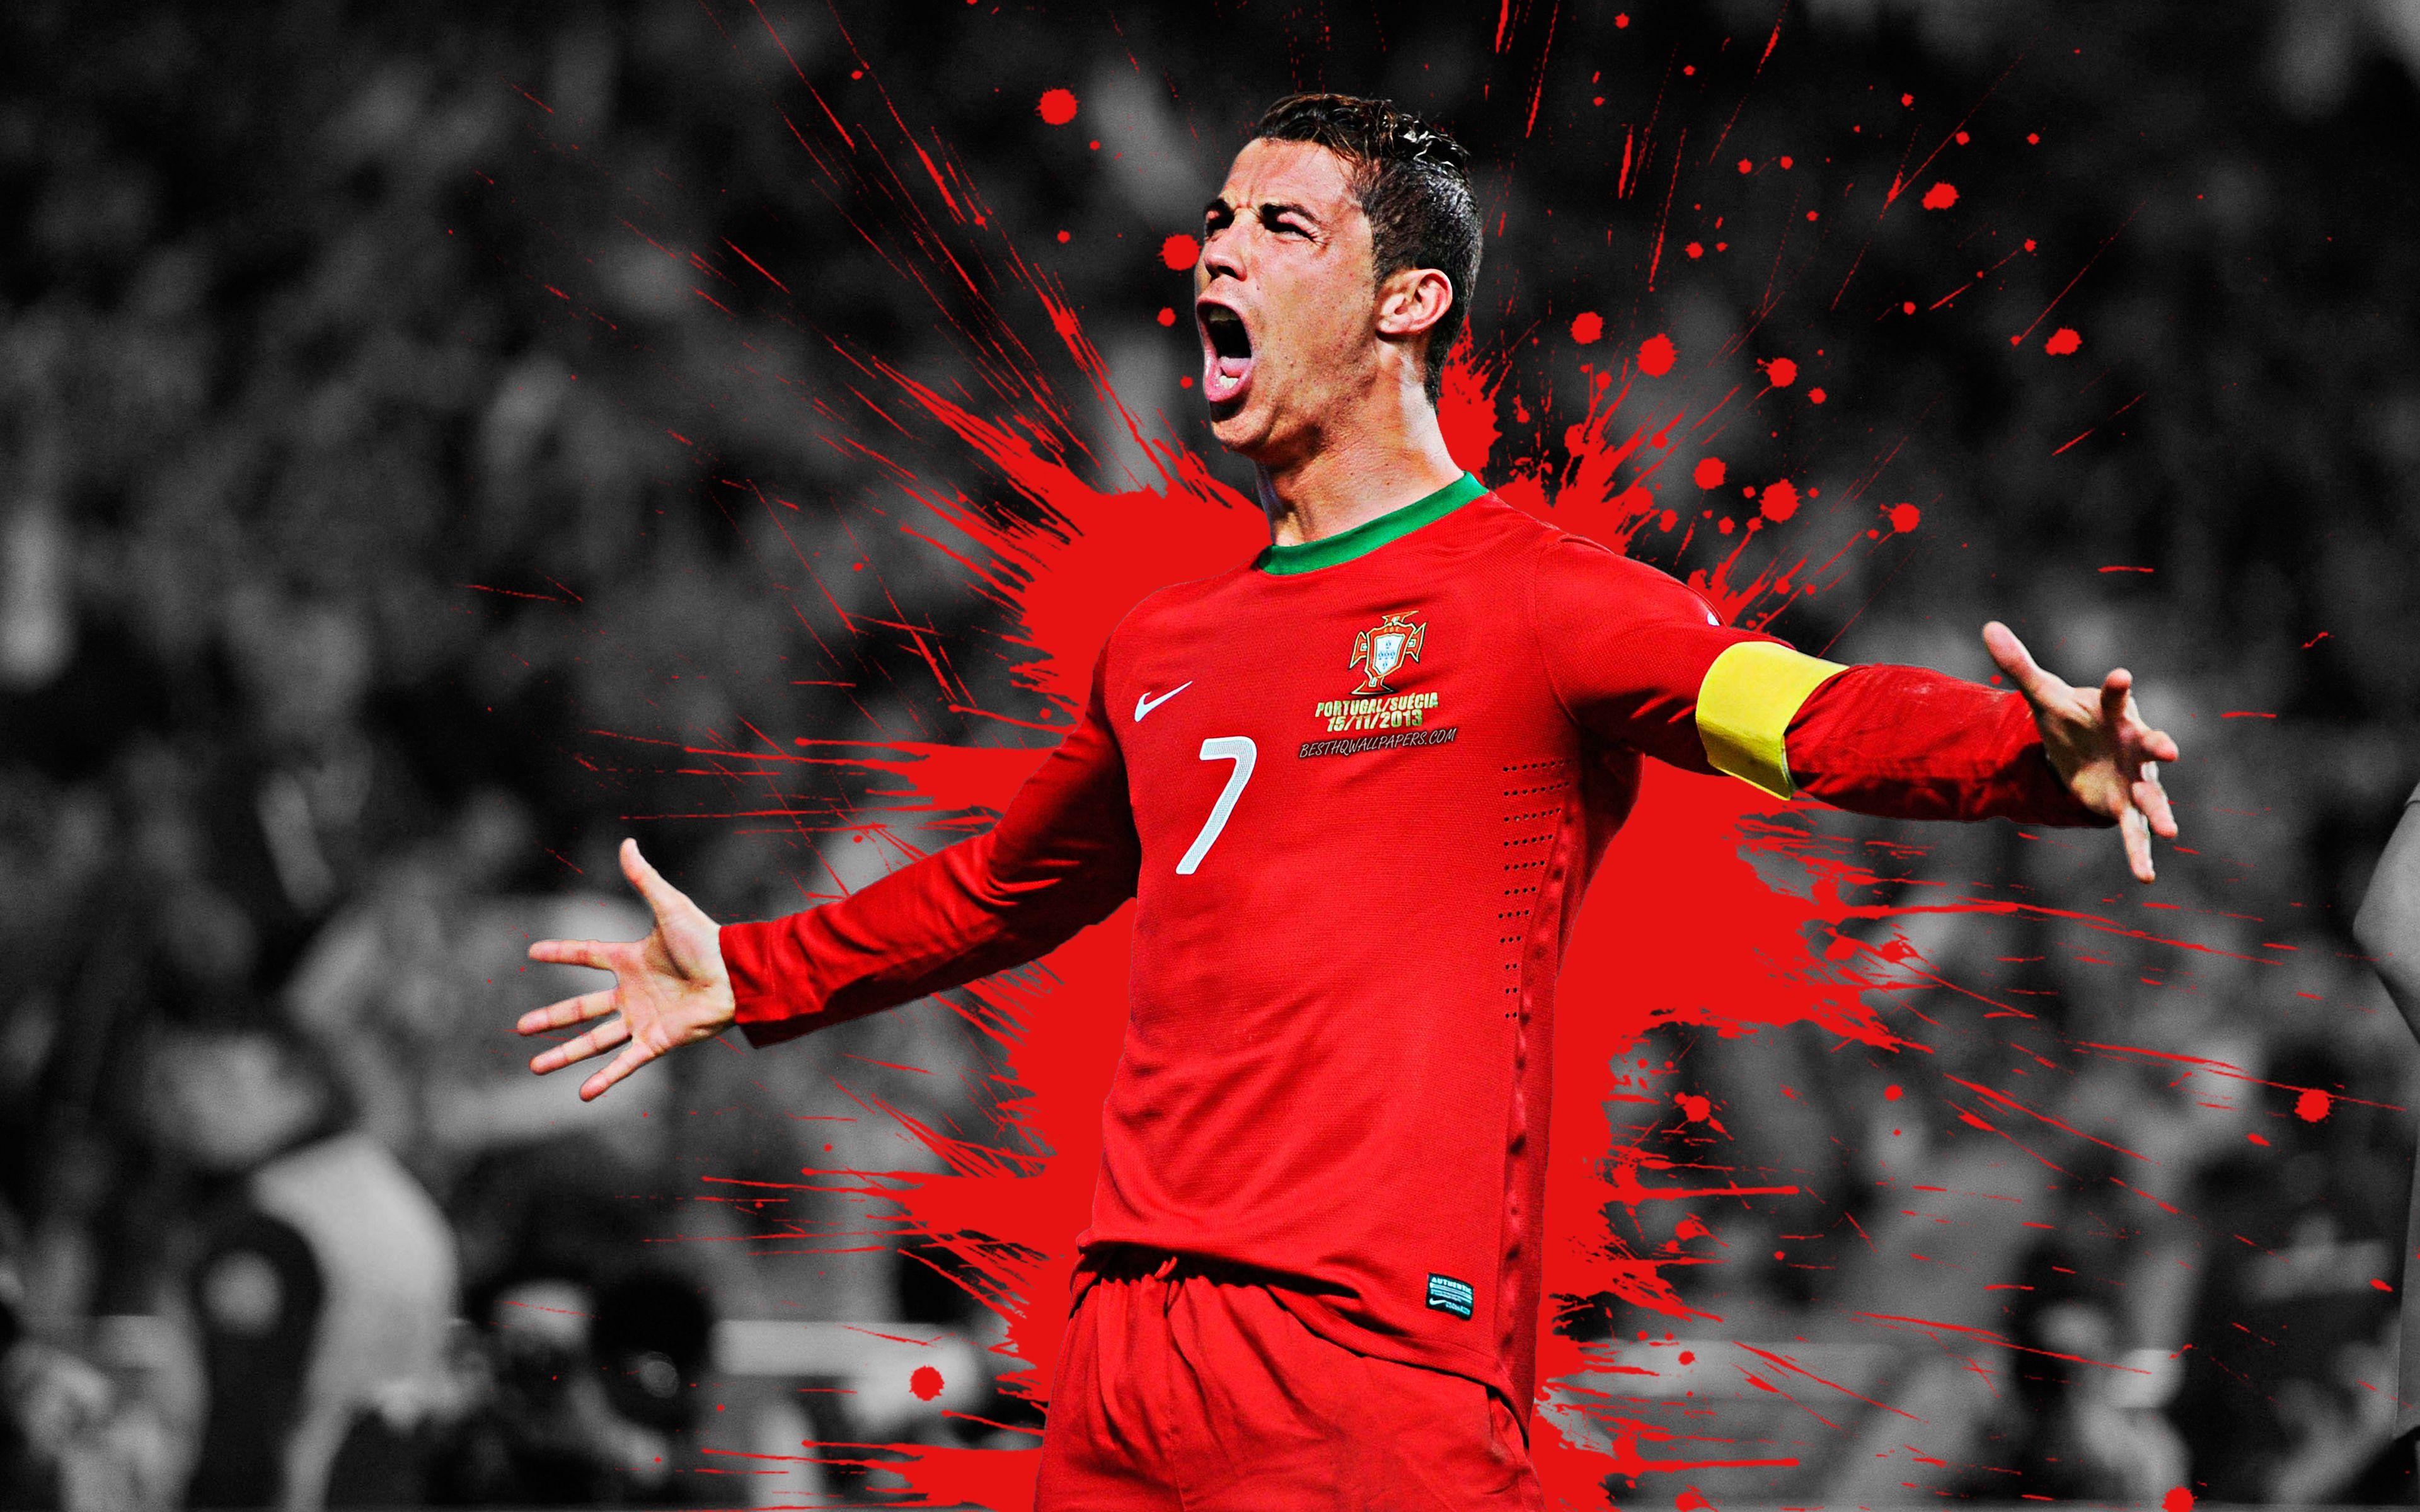 Cristiano Ronaldo Wallpaper For Laptop 4k - Image to u